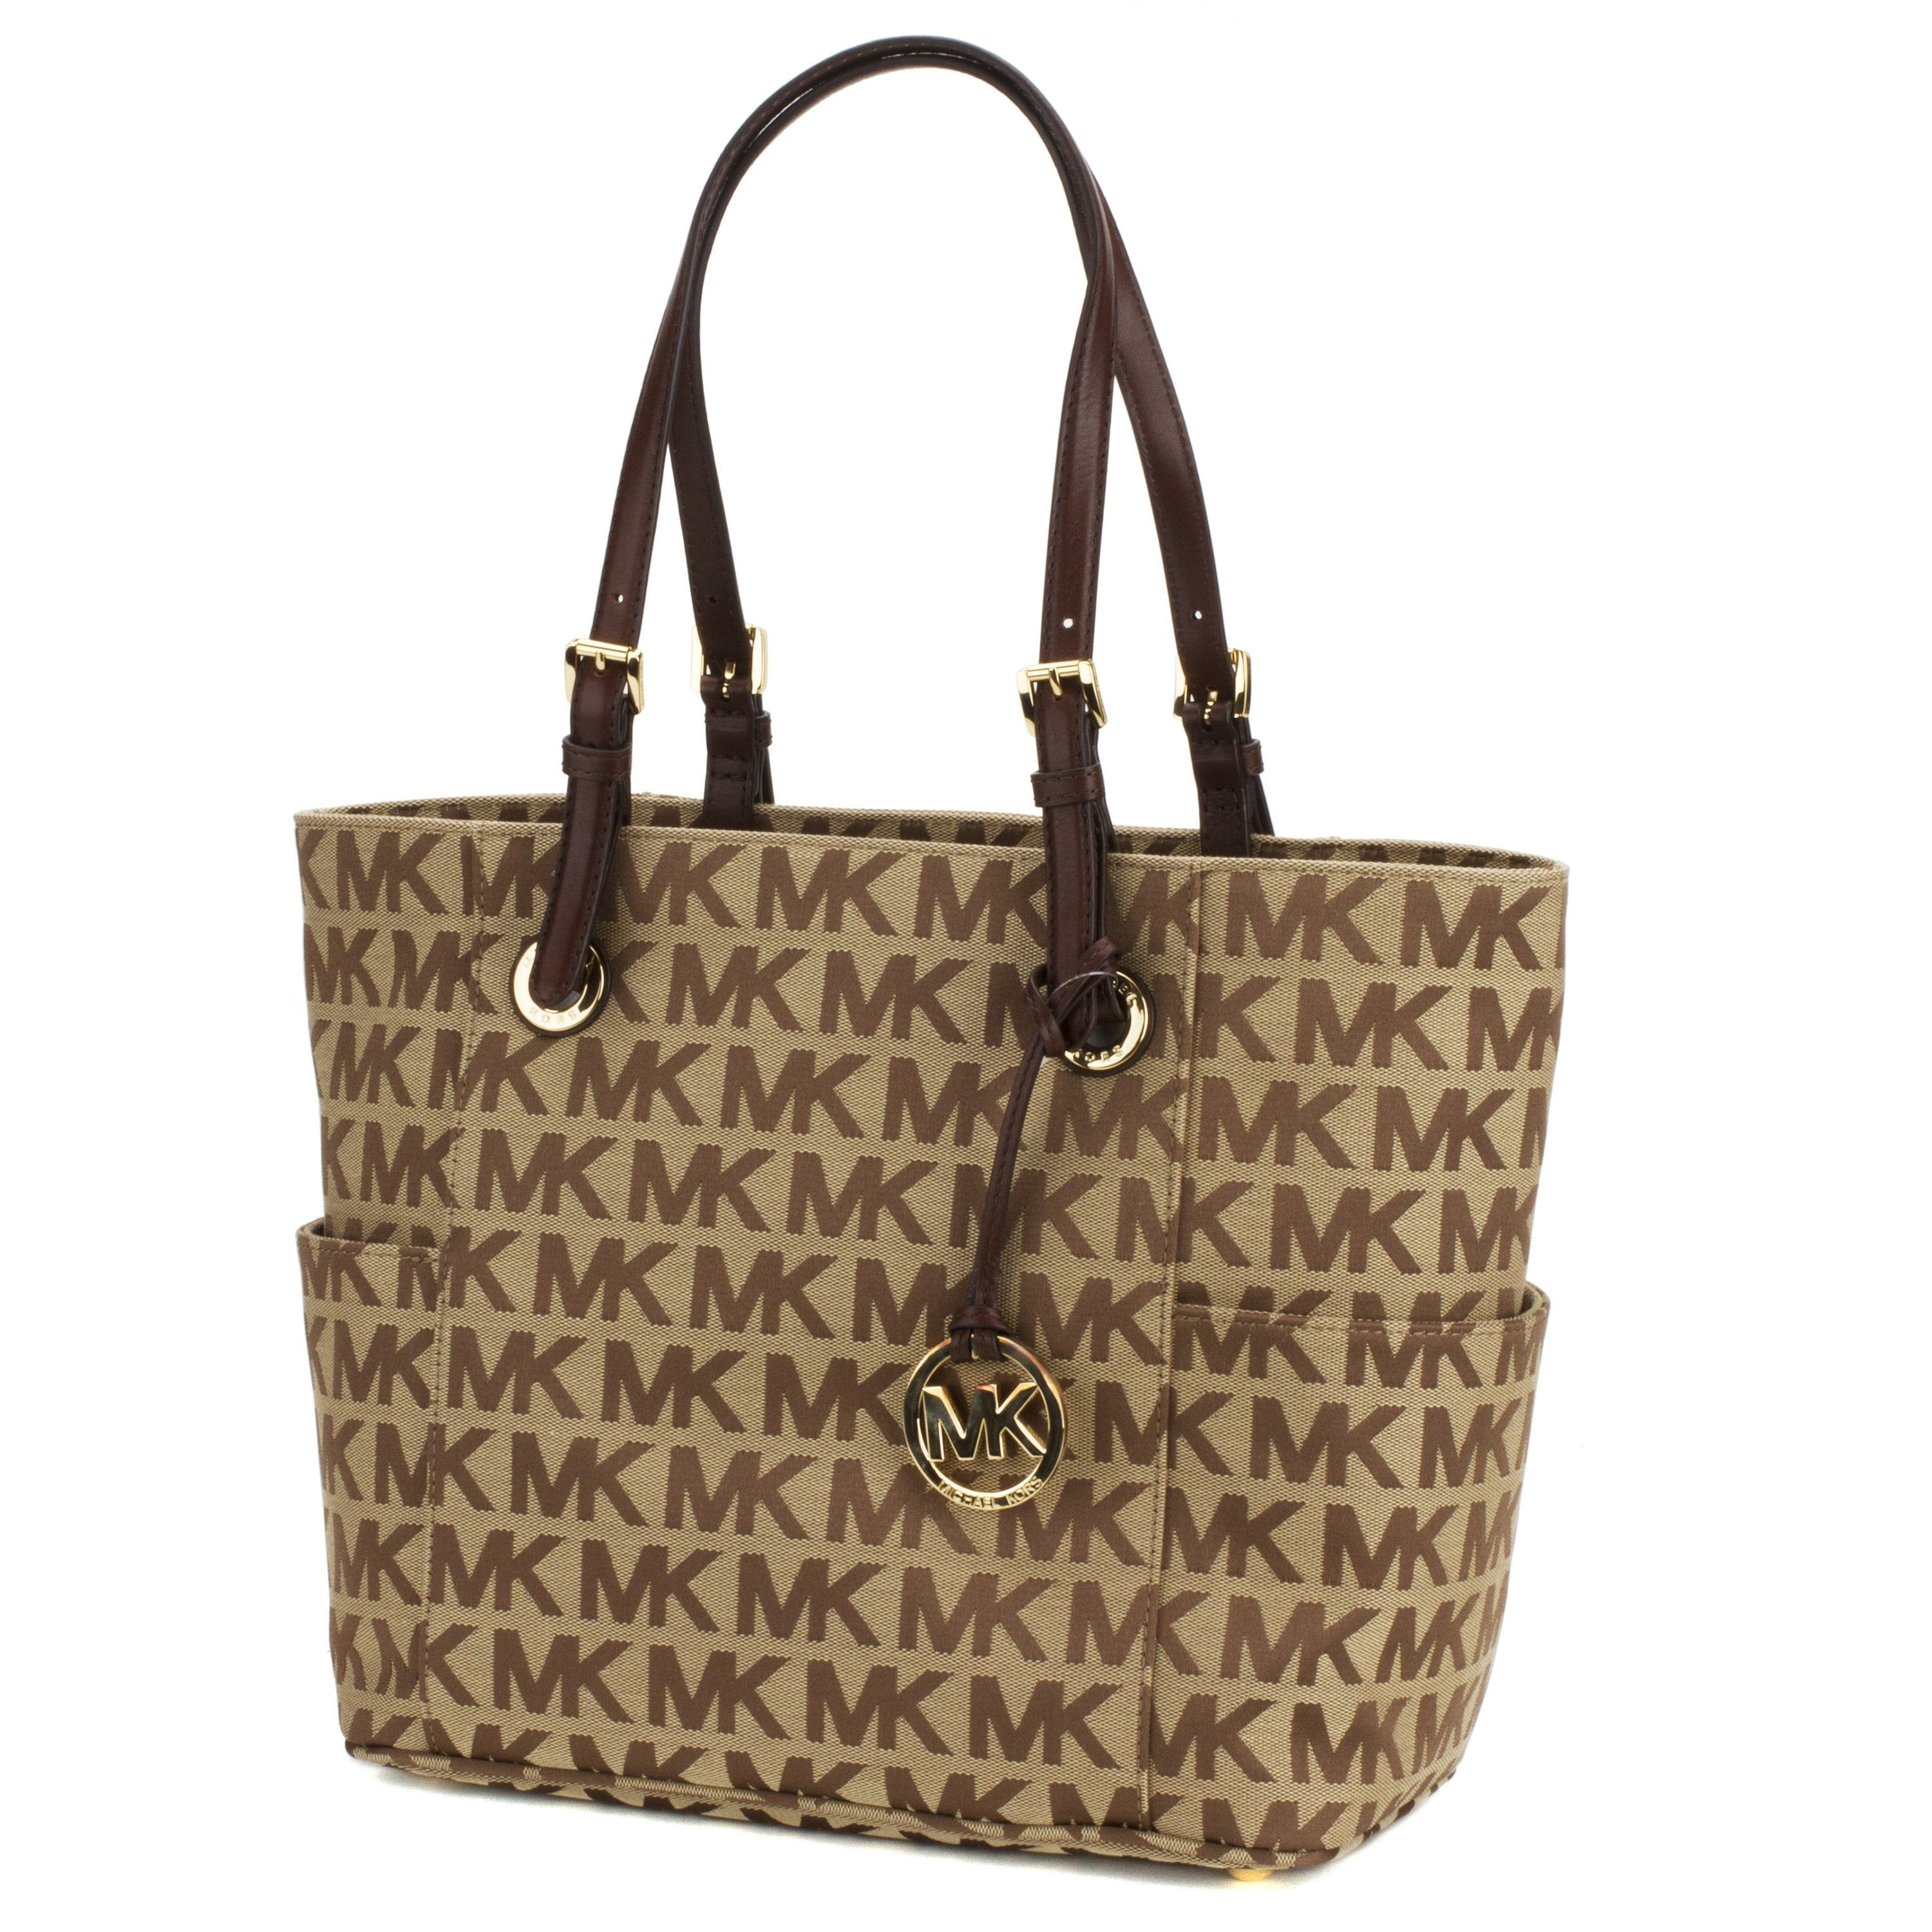 michael kors handbags with mk logo